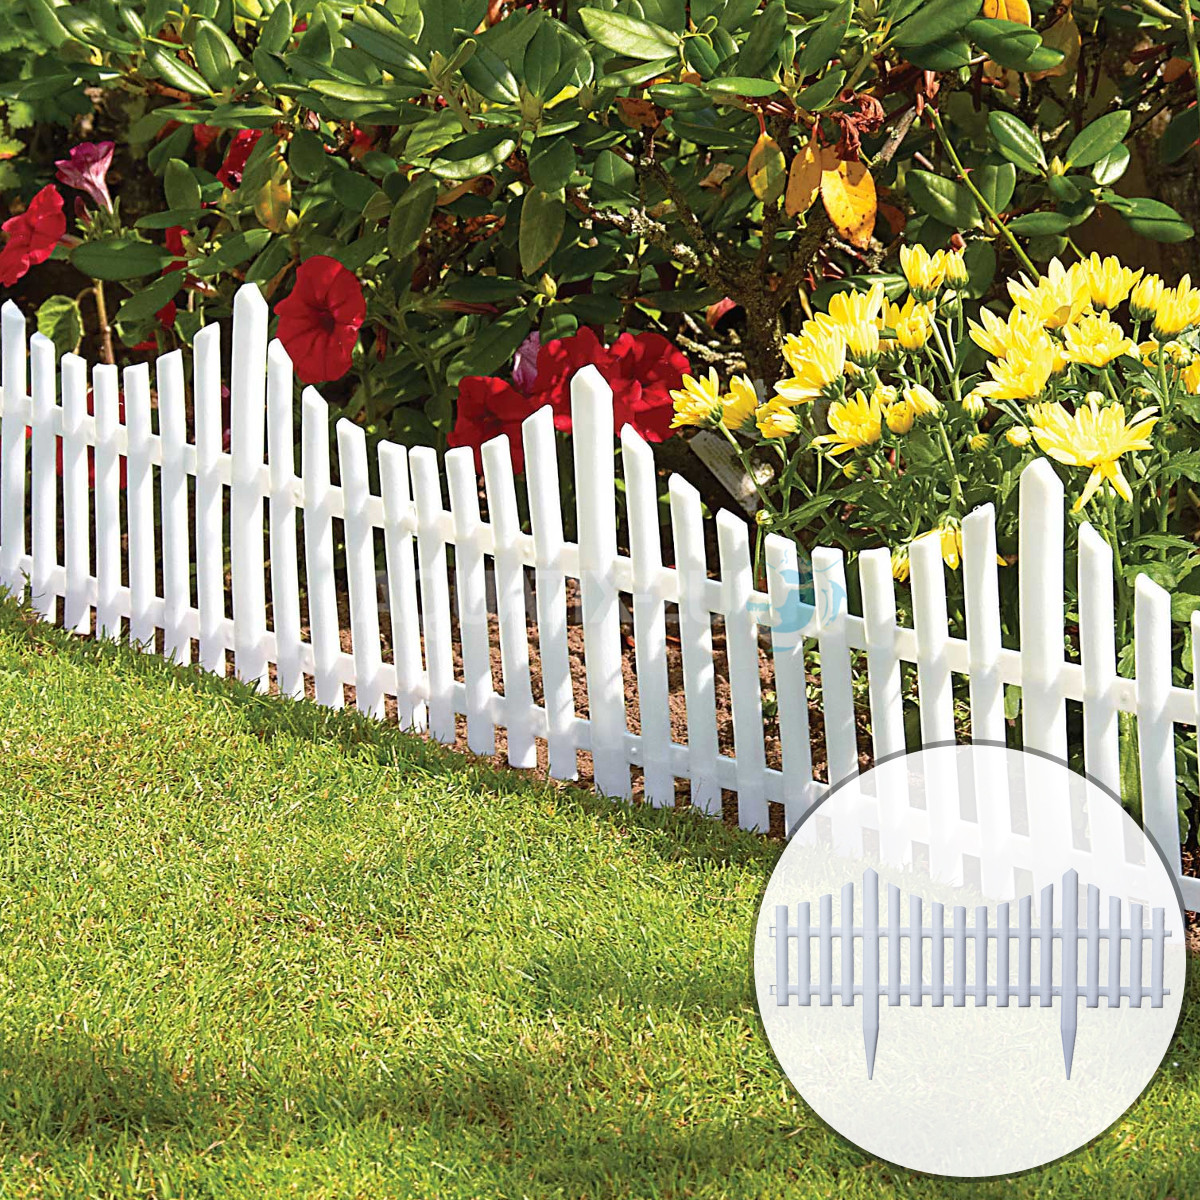 Landscape Fence Edging
 FLEXIBLE INTERLOCKING WHITE PLASTIC PICKET GARDEN FENCE